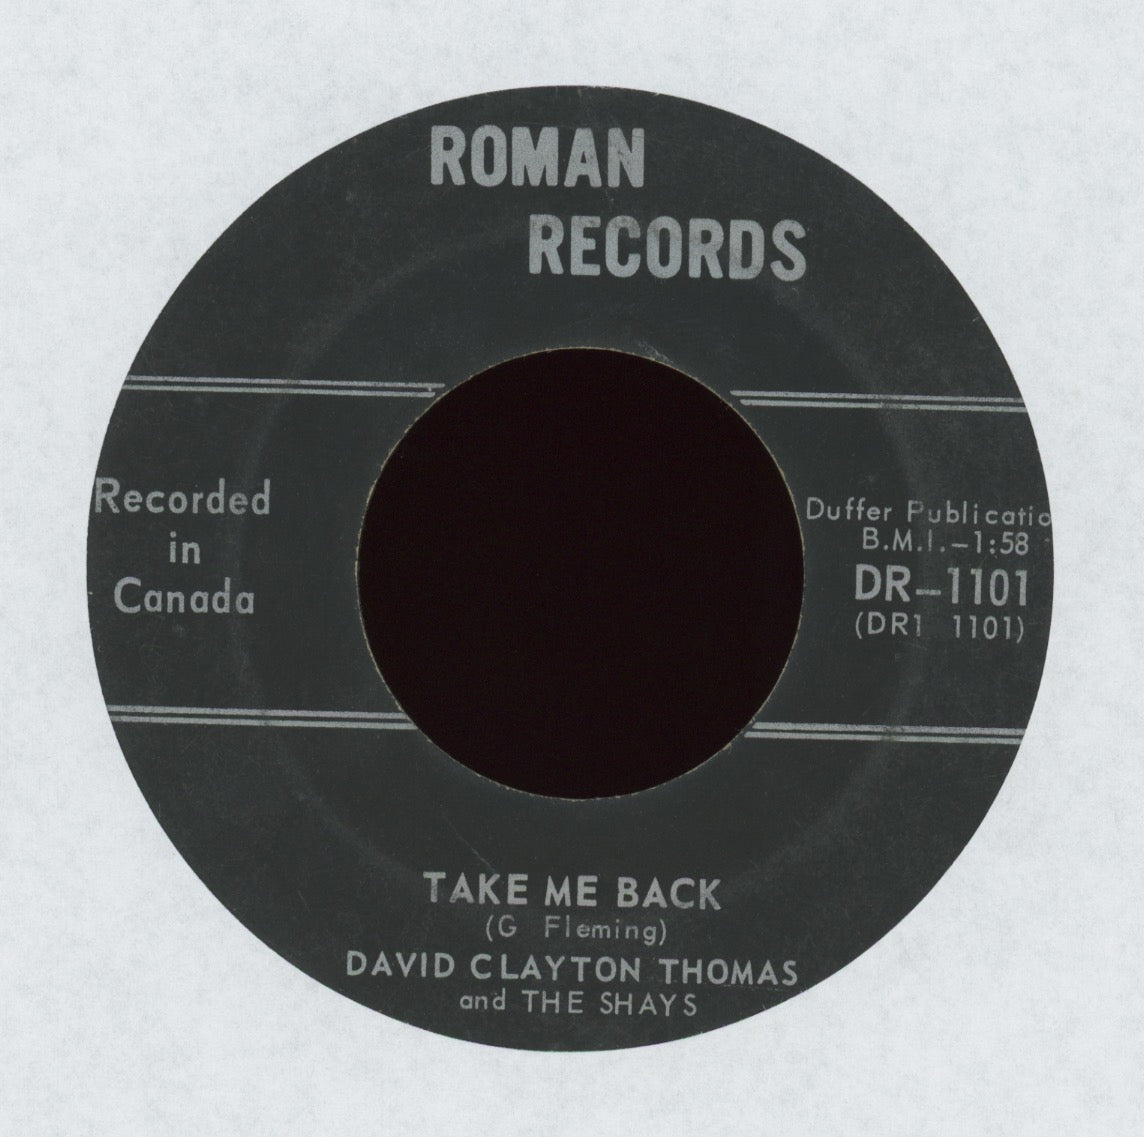 David Clayton Thomas & The Shays - Take Me Back on Roman Canadian Press